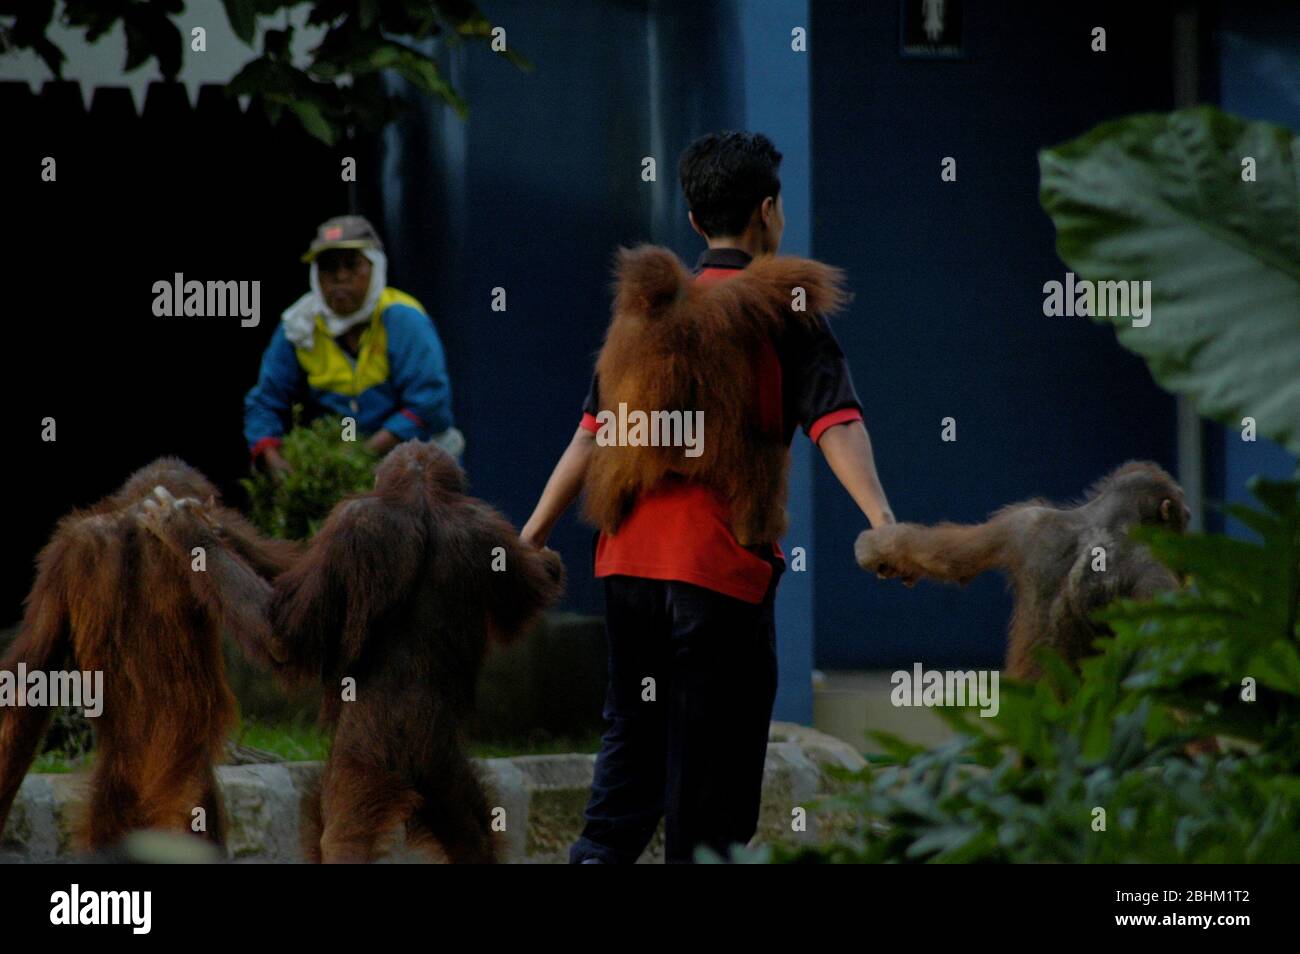 Orangutan keeper walks a group of orangutans. Archival photo. Stock Photo